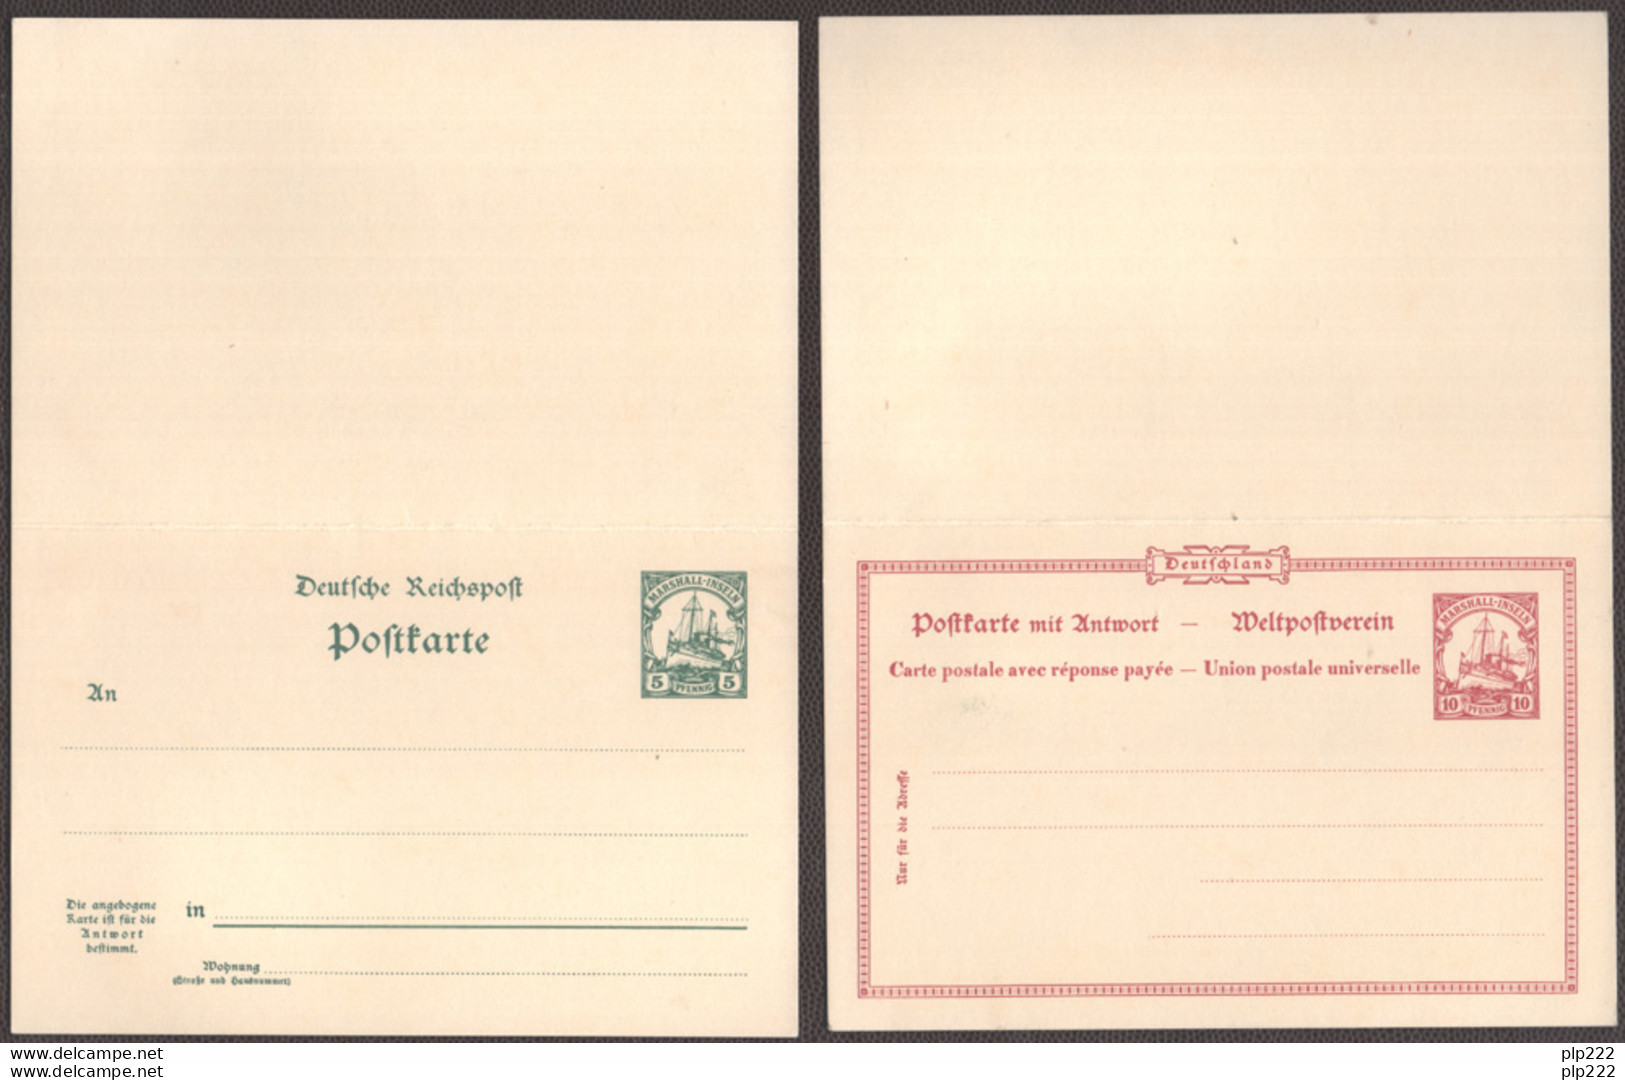 Isole Marshall 1900 2 Postal Card "Postkarte" 5-10pf. Risposta Pagata - Paid Response VF - Isole Marshall